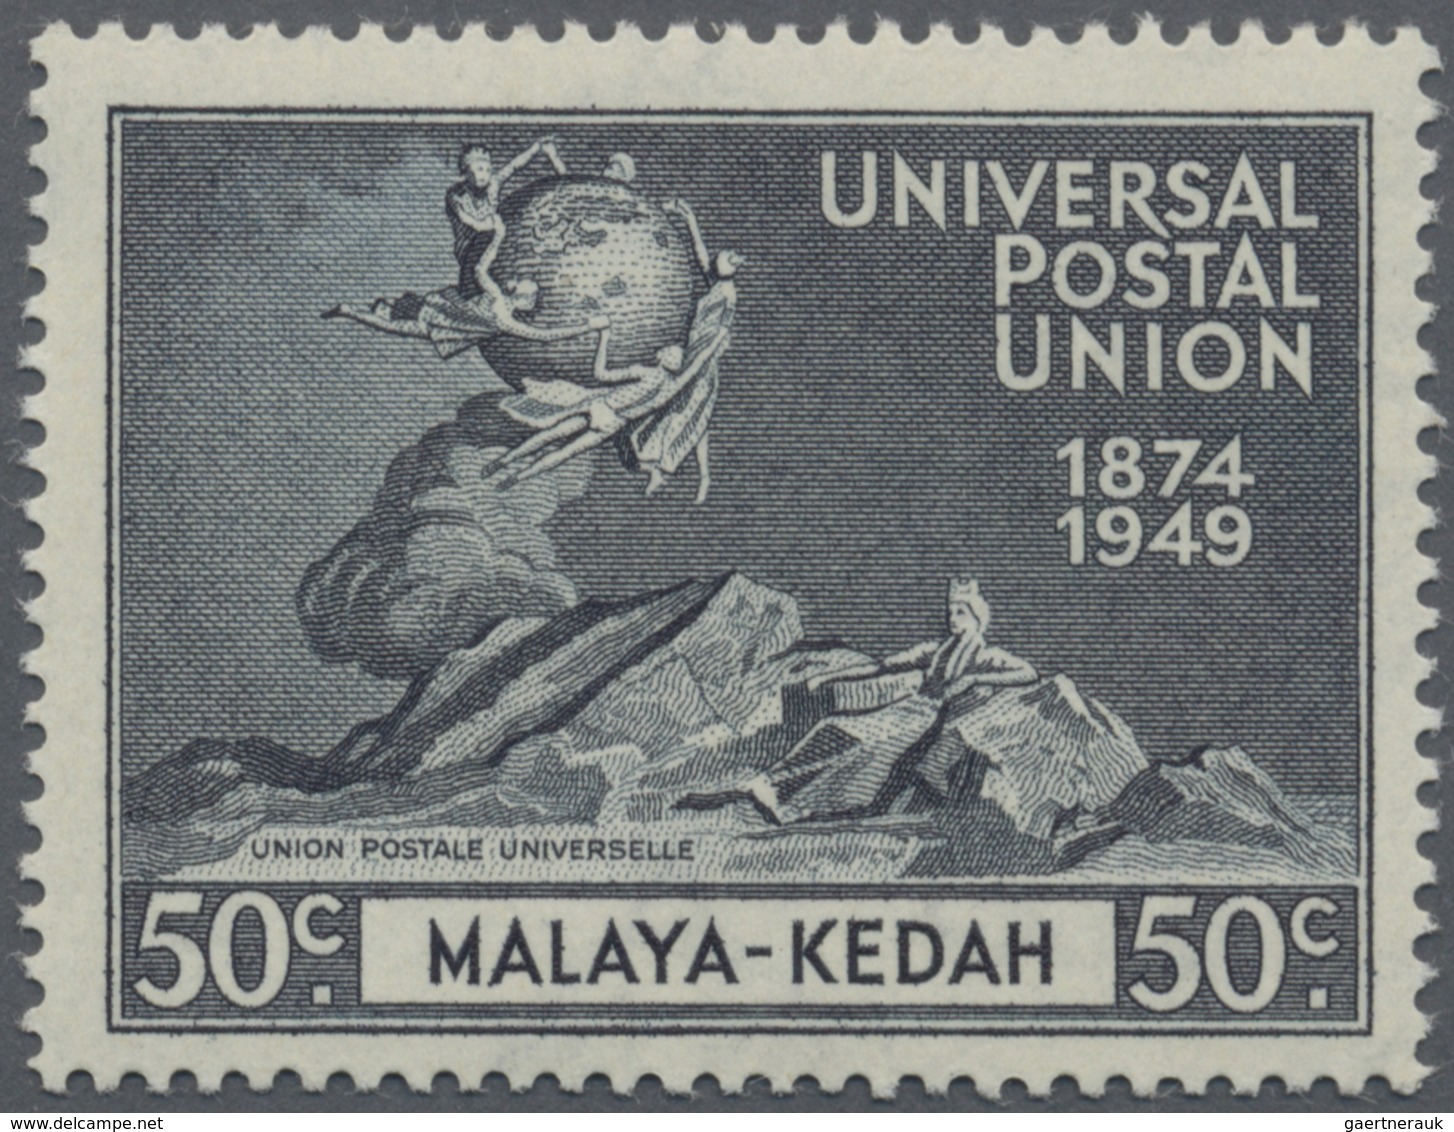 ** Malaiische Staaten - Kedah: 1949 UPU 50c. Blue-black, Variety "A" Of "CA" Missing From Watermark, Mi - Kedah